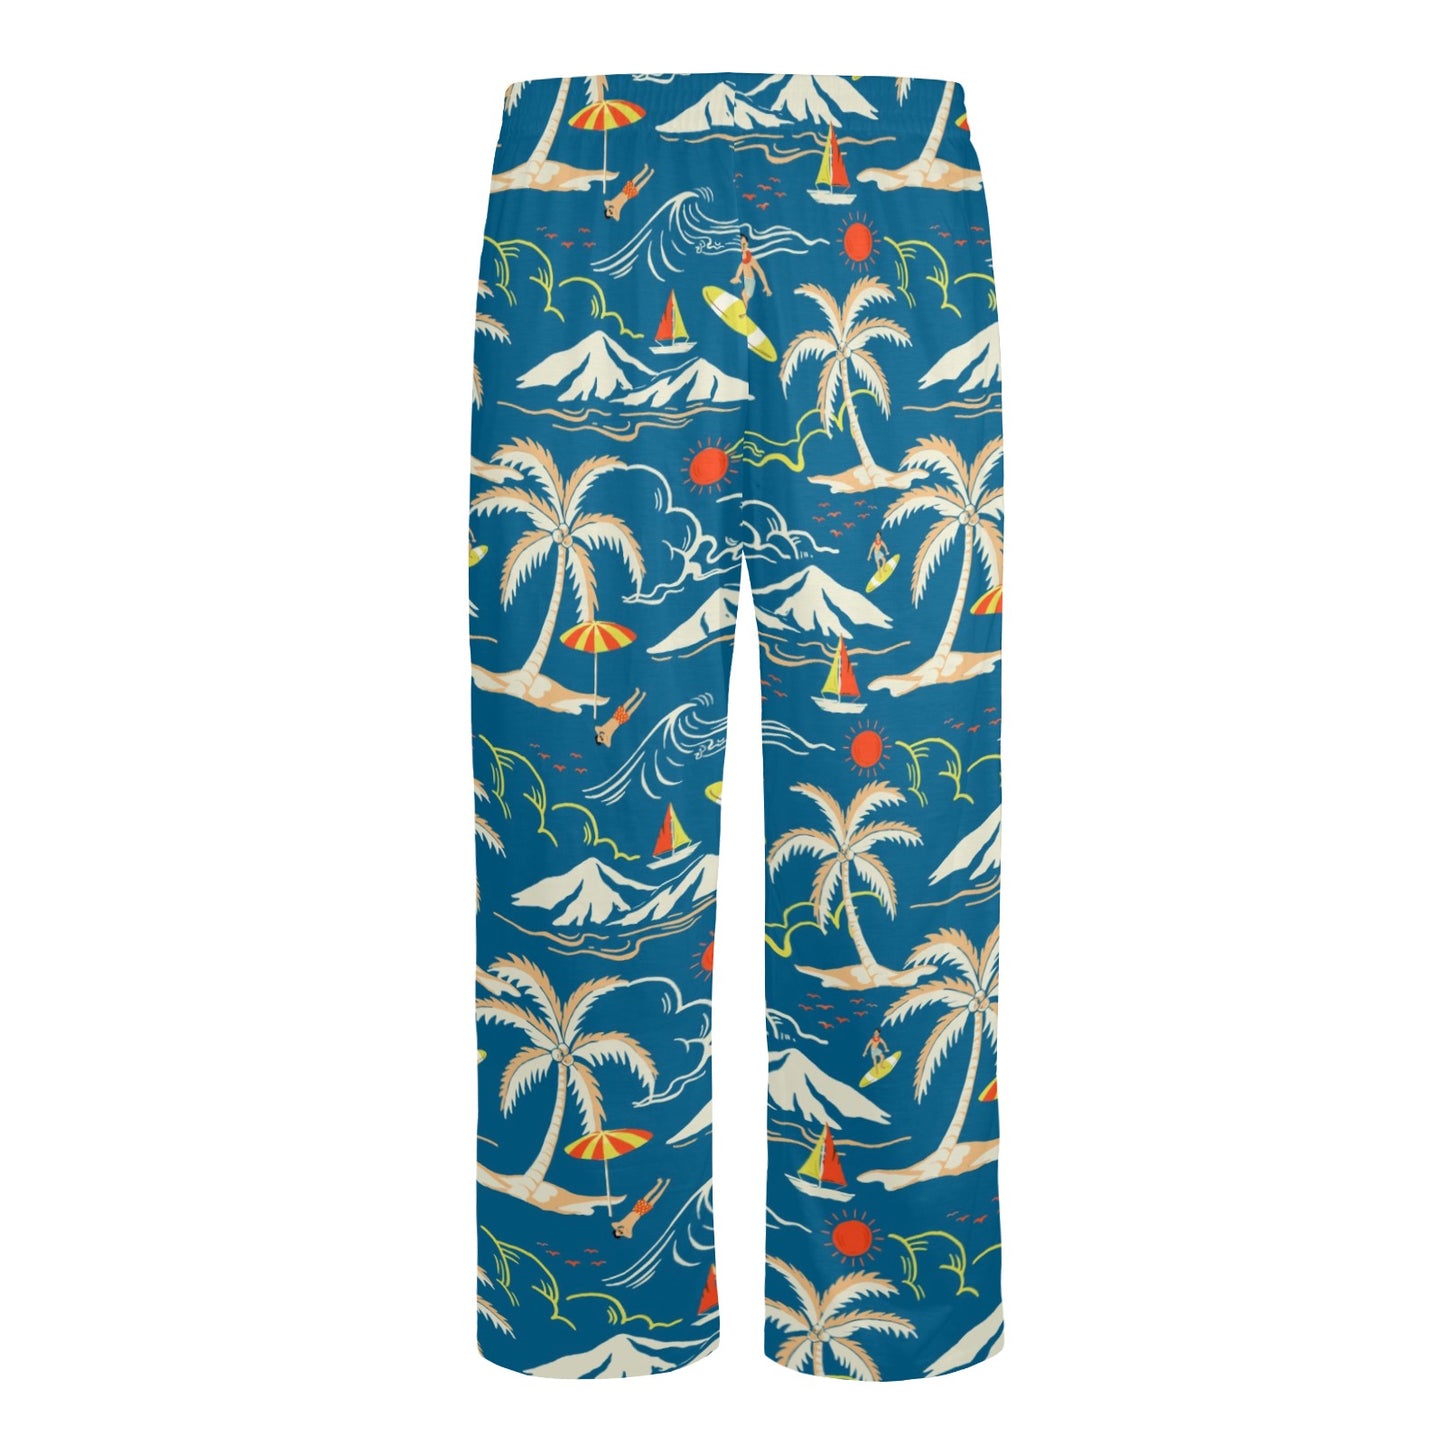 Tropical Men Pajamas Pants, Ocean Beach Sea Palm Trees Vacation Pattern Satin PJ Pockets Sleep Trousers Couples Matching Trousers Bottoms